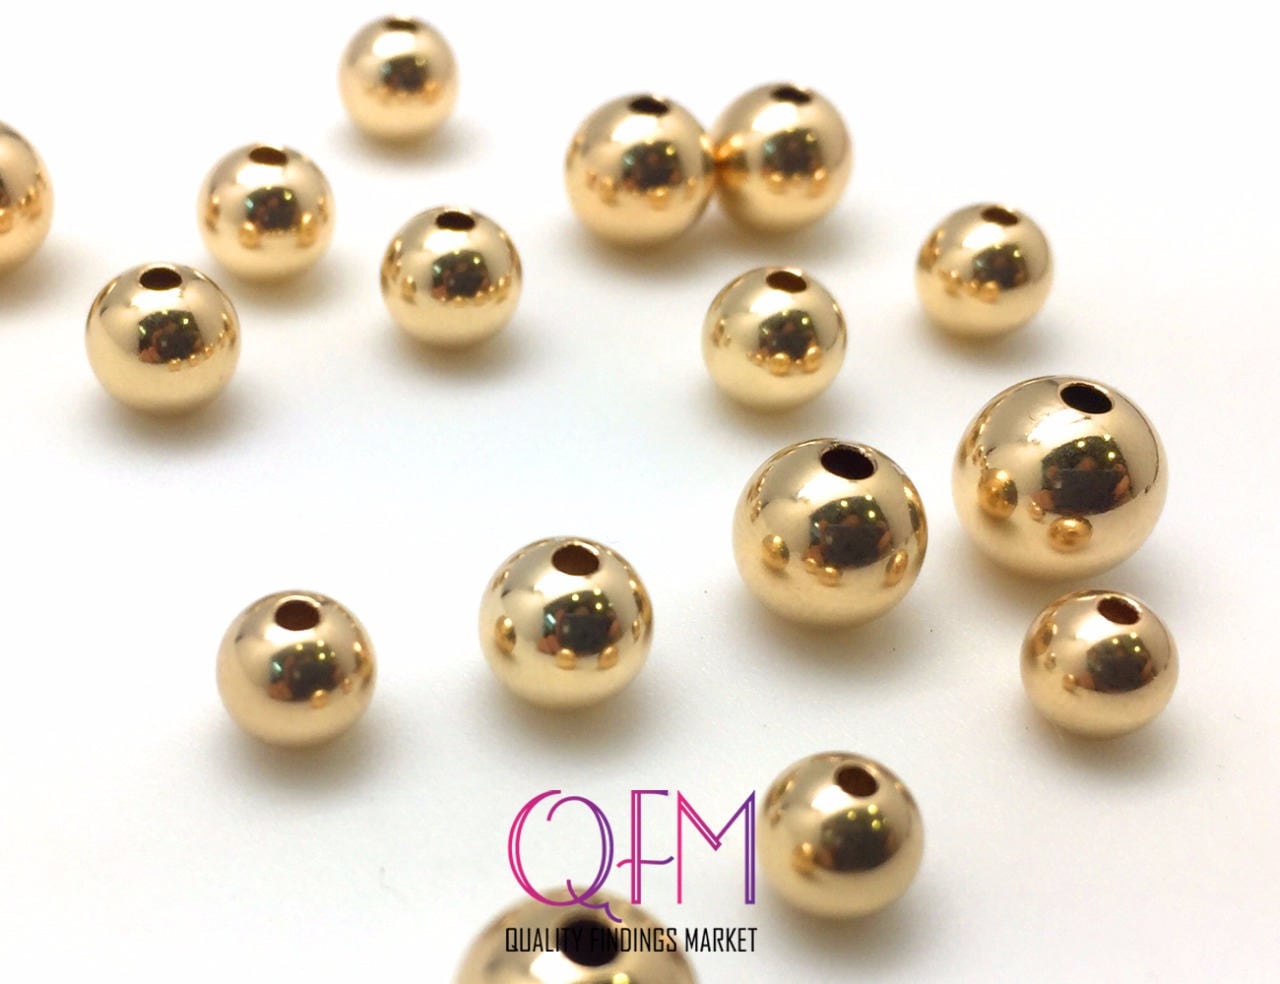 12 Packs: 200 ct. (2,400) Premium Metals Gold Spacer Beads by Bead Landing™